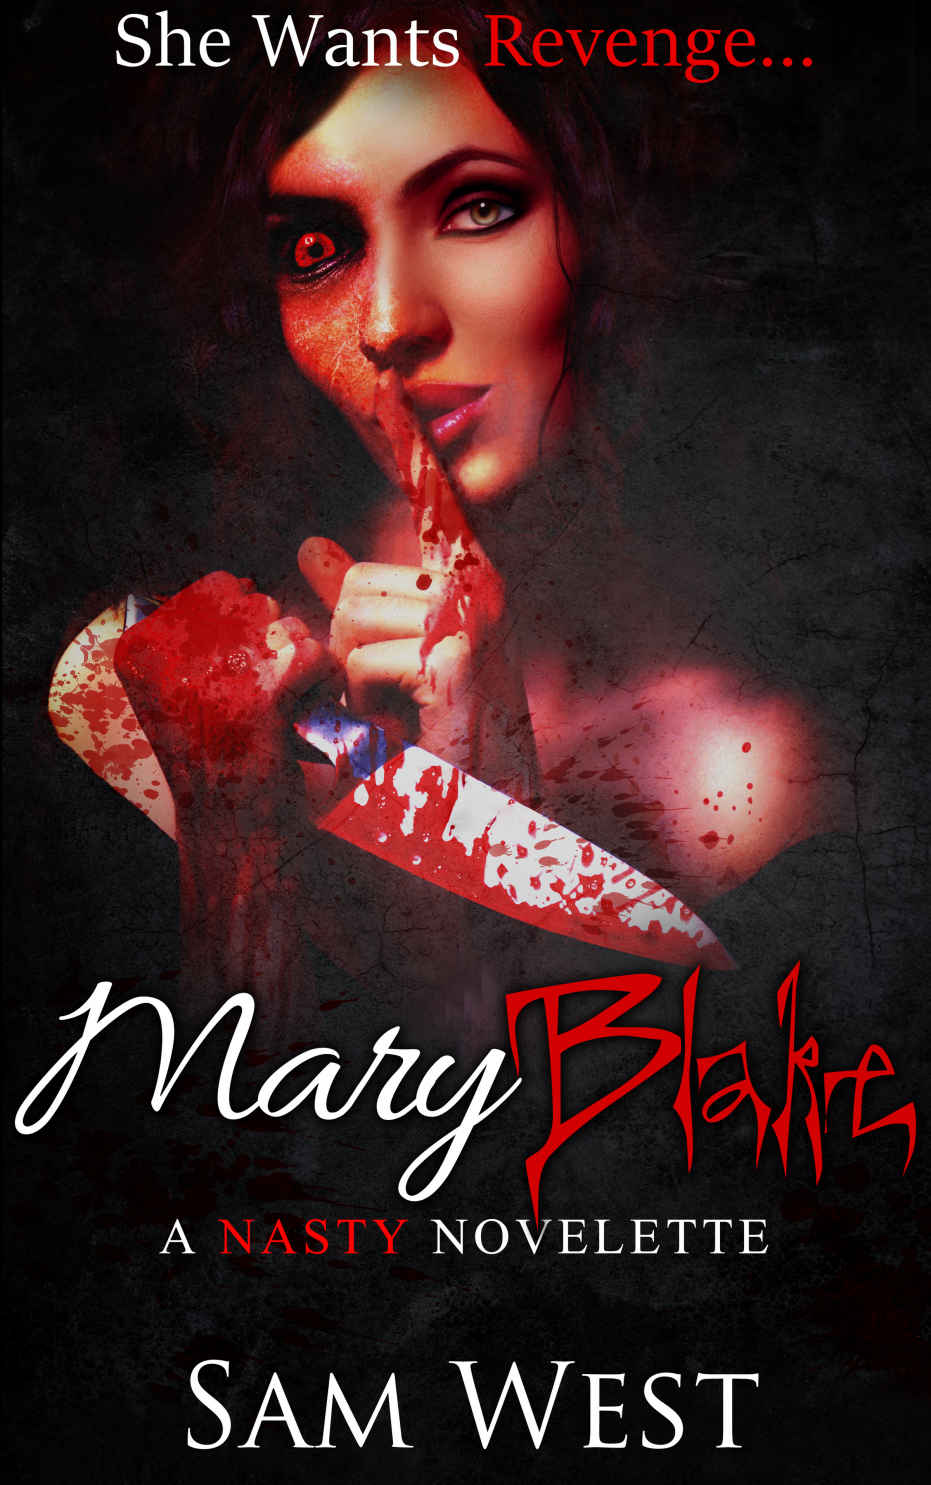 Mary Blake